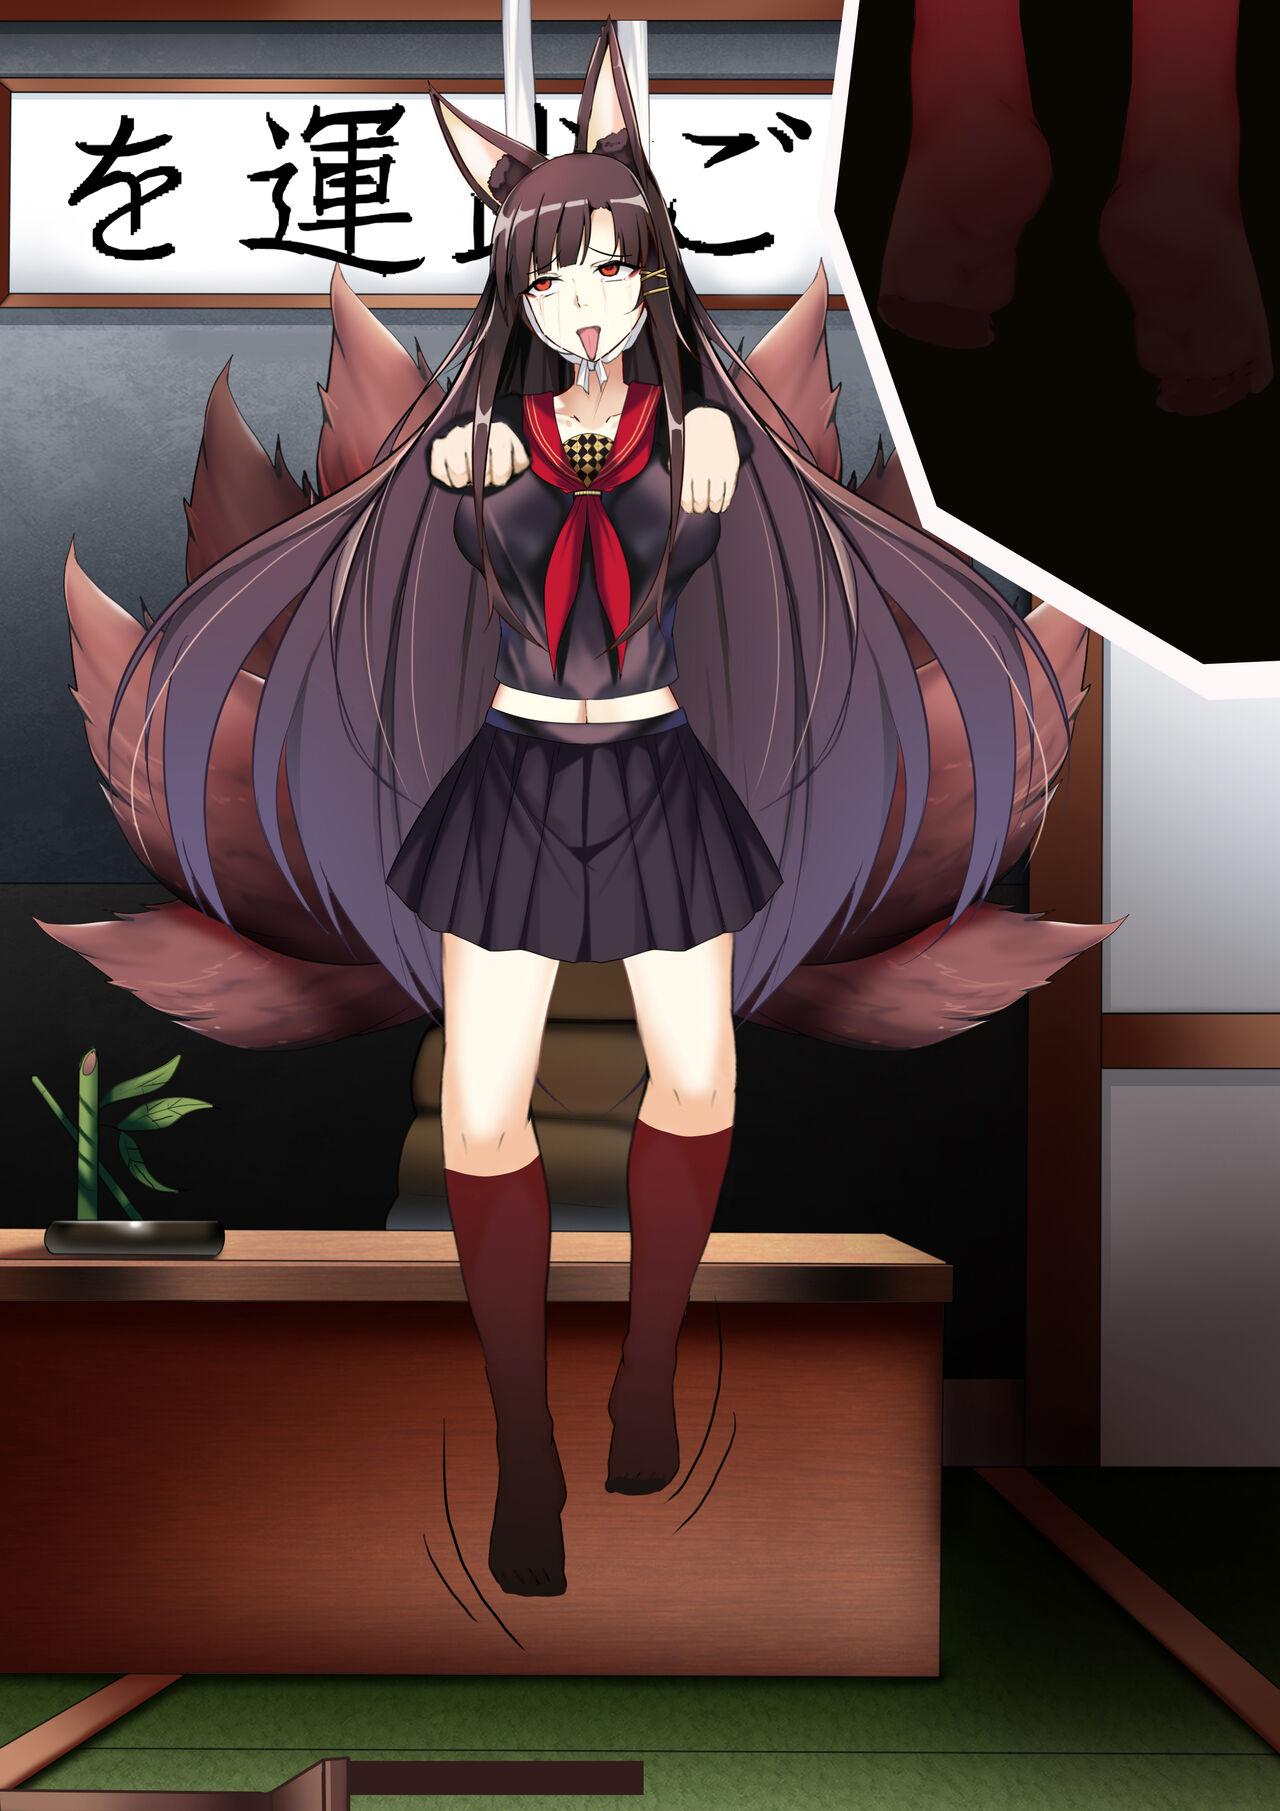 Akagi hanged herself in her office 117